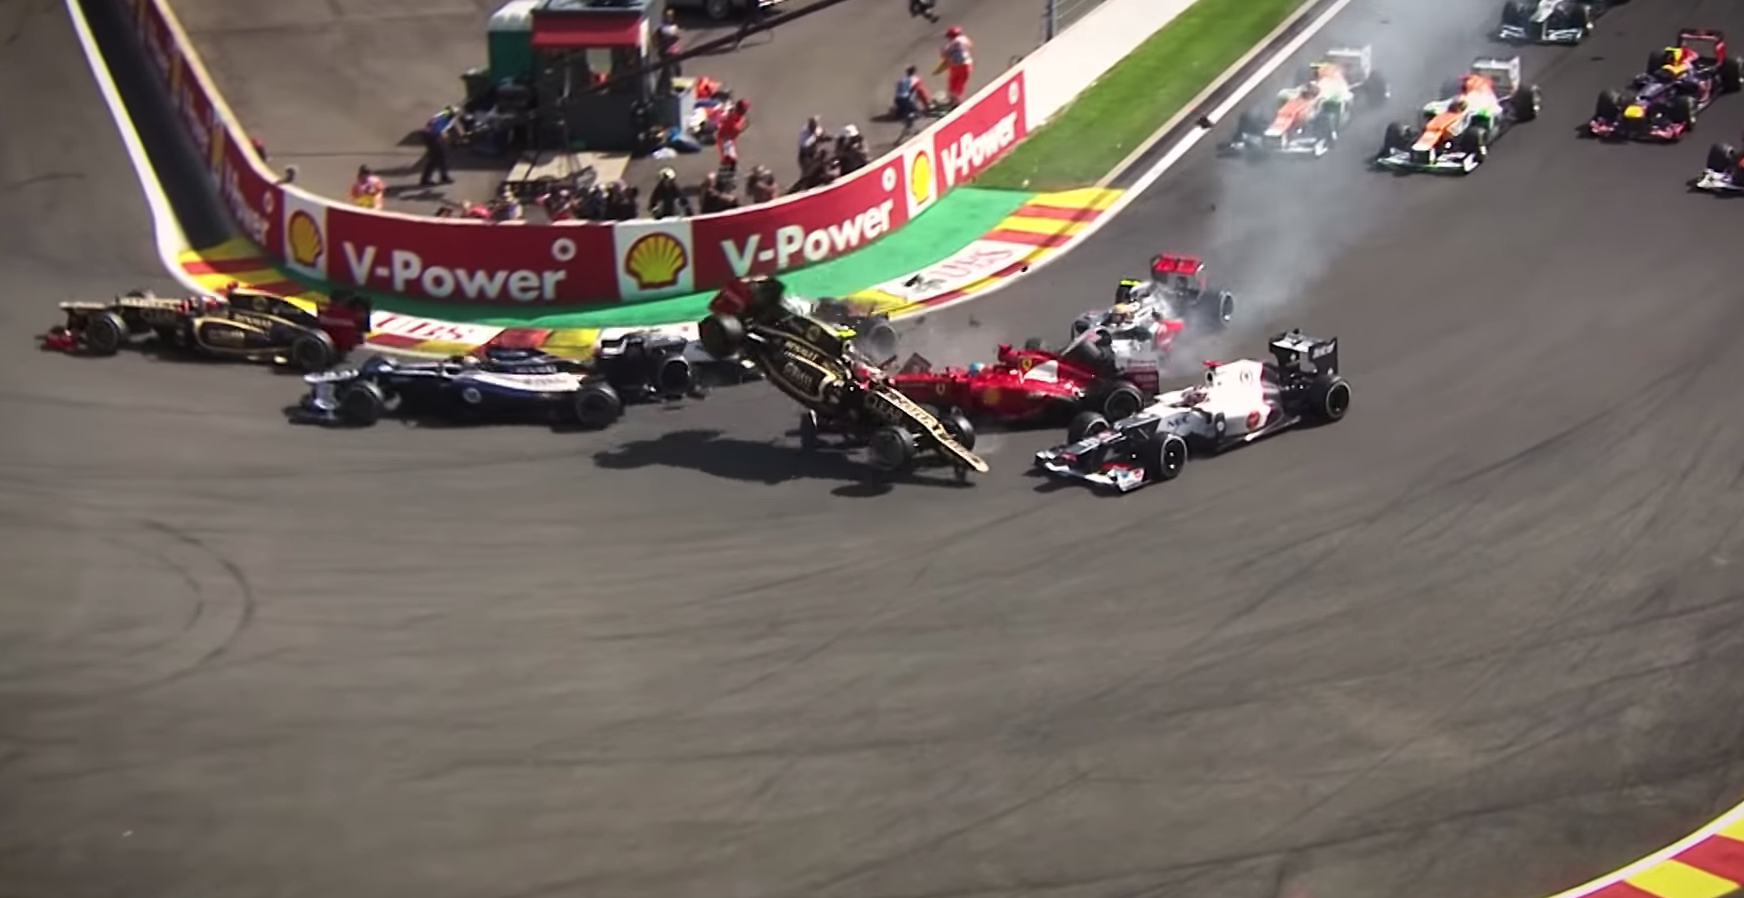 F1 Crash - Alex Peroni Walks Away From Huge F3 Crash At Monza : Marcus ericsson suffered a 